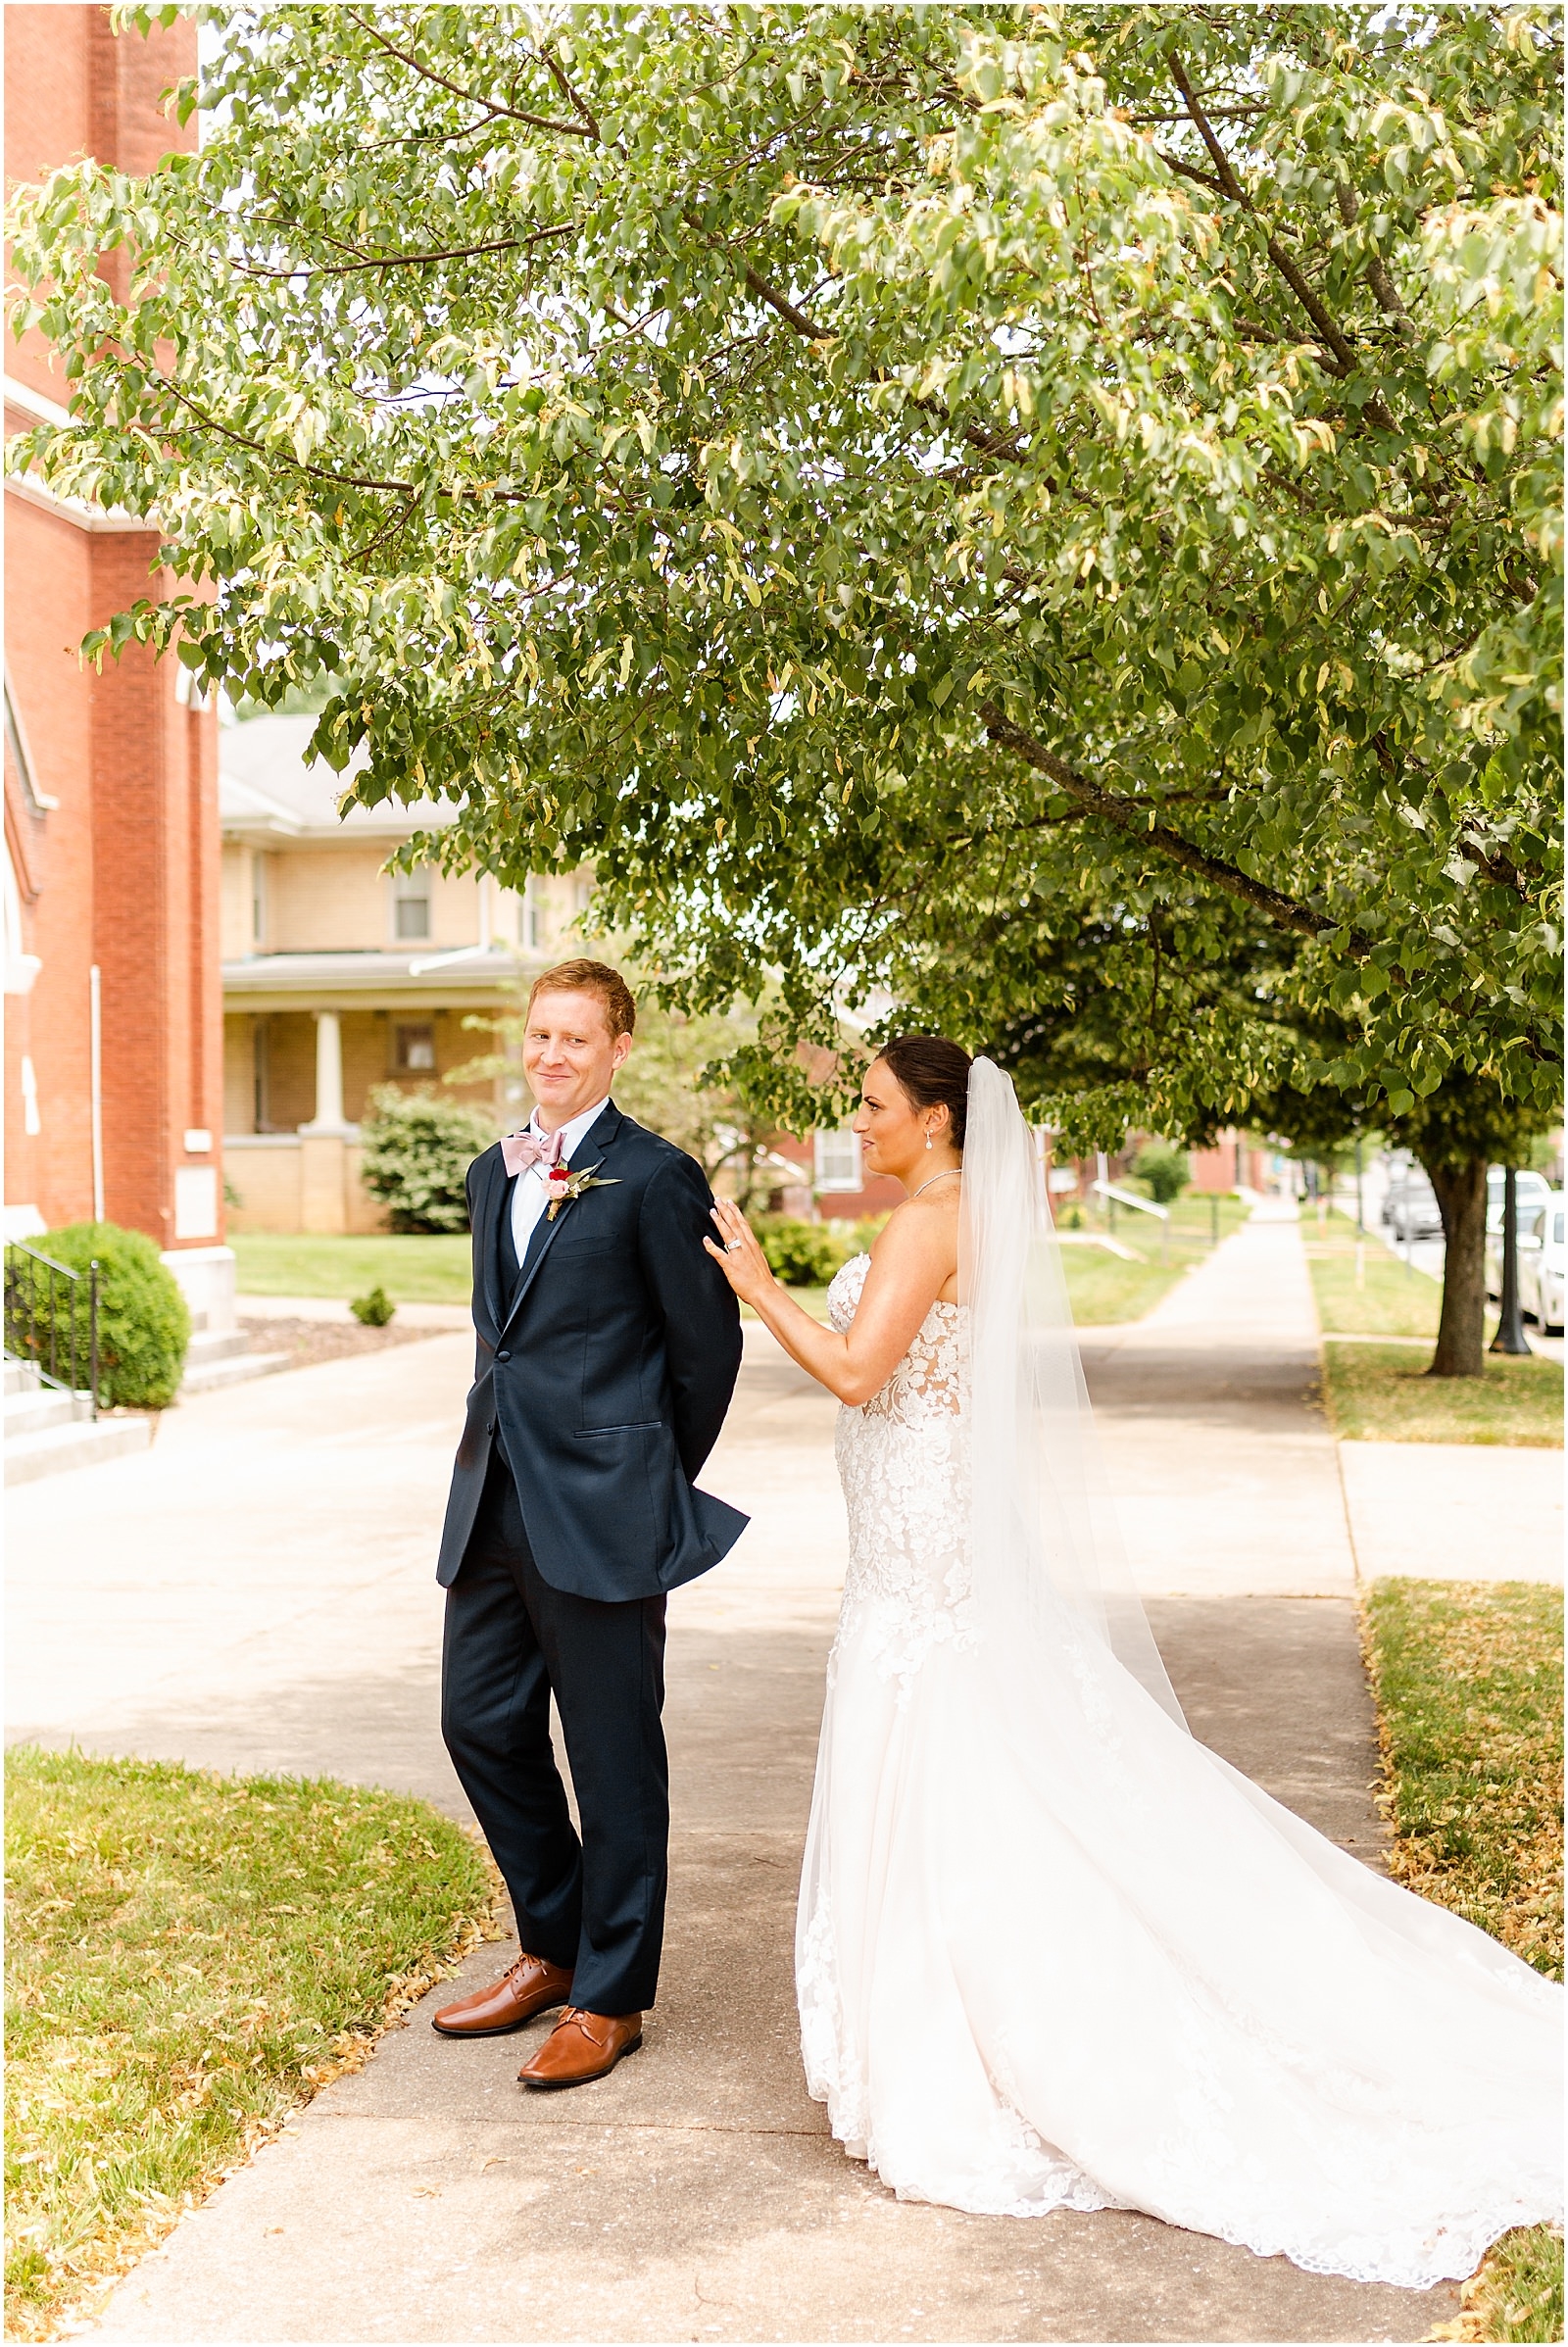 Deidra and Andrew | A Huntingburgh Indiana Wedding Bret and Brandie | Evansville Photographers | @bretandbrandie-0043.jpg